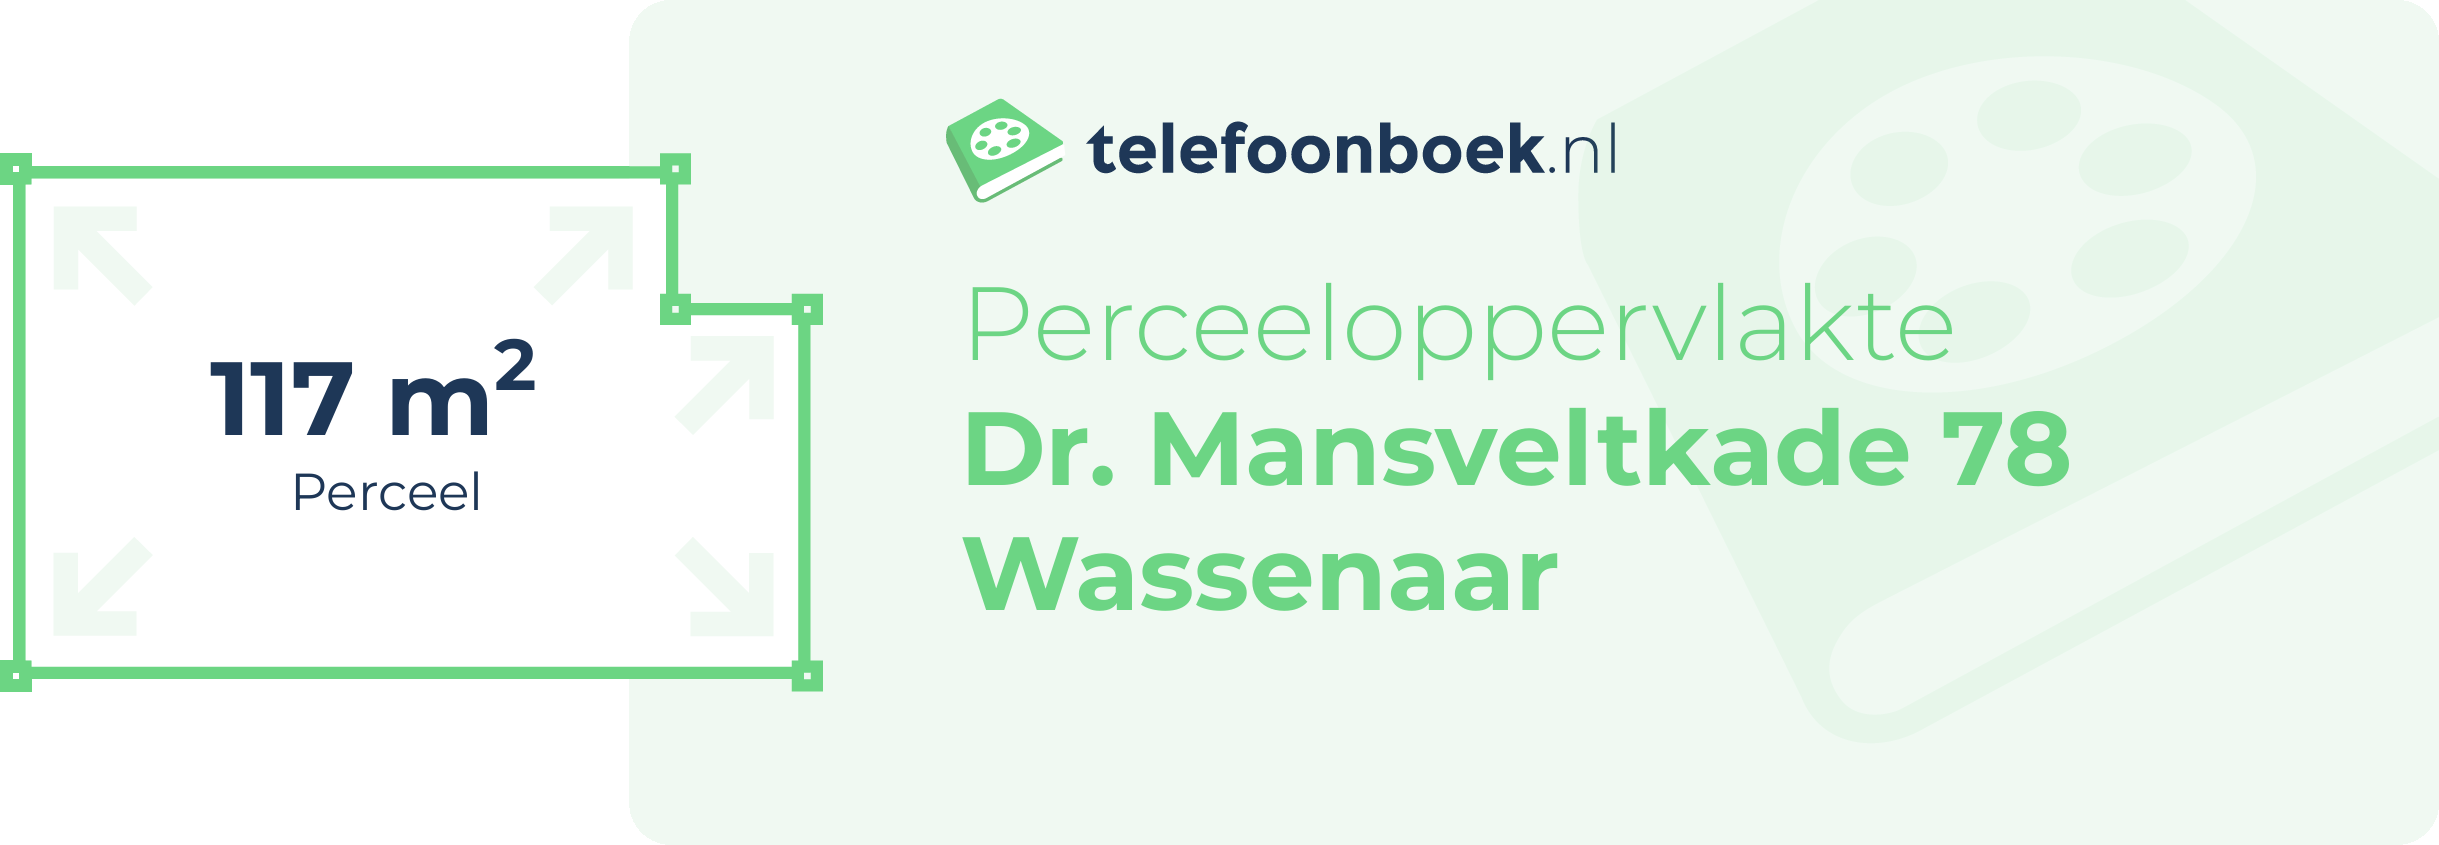 Perceeloppervlakte Dr. Mansveltkade 78 Wassenaar